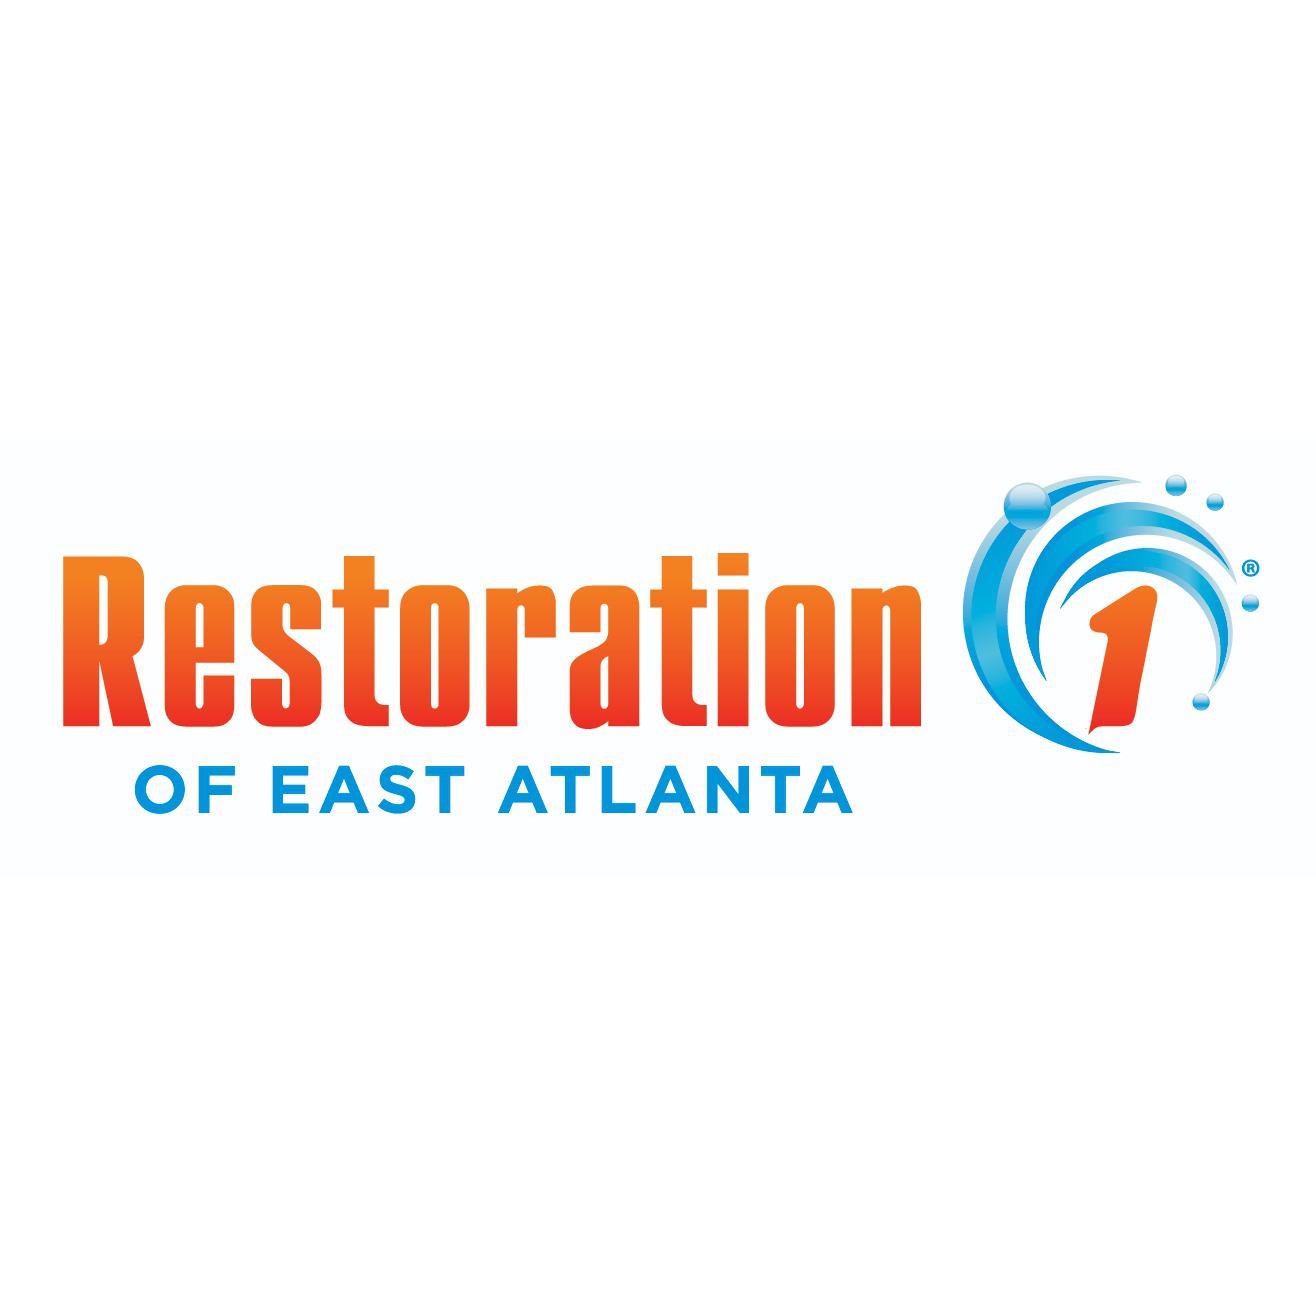 Restoration 1 of East Atlanta